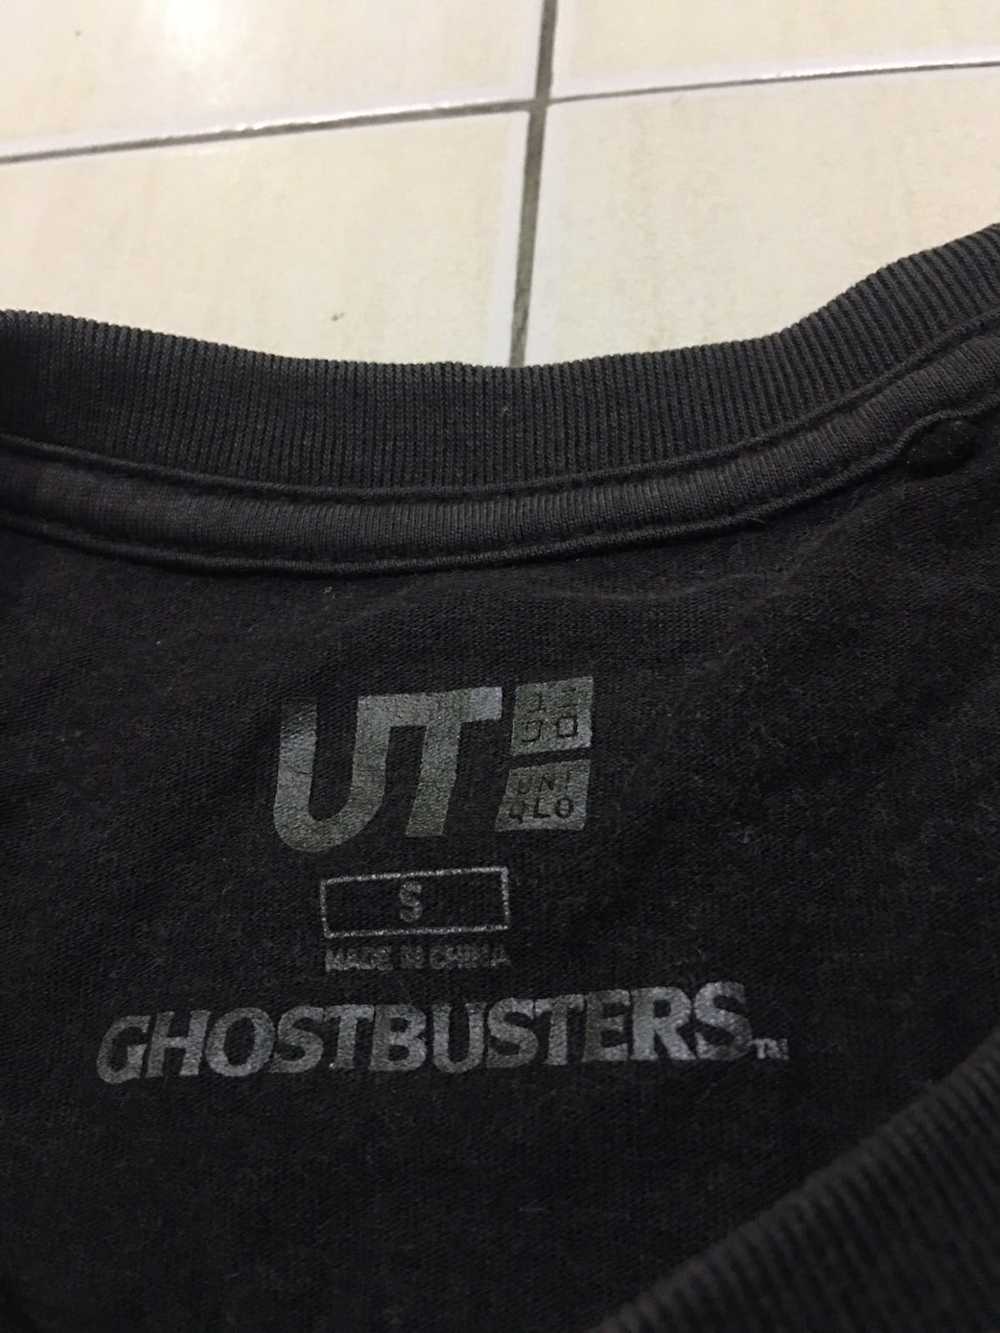 Uniqlo Ghostbusters 2 movie film promo shirt - image 4